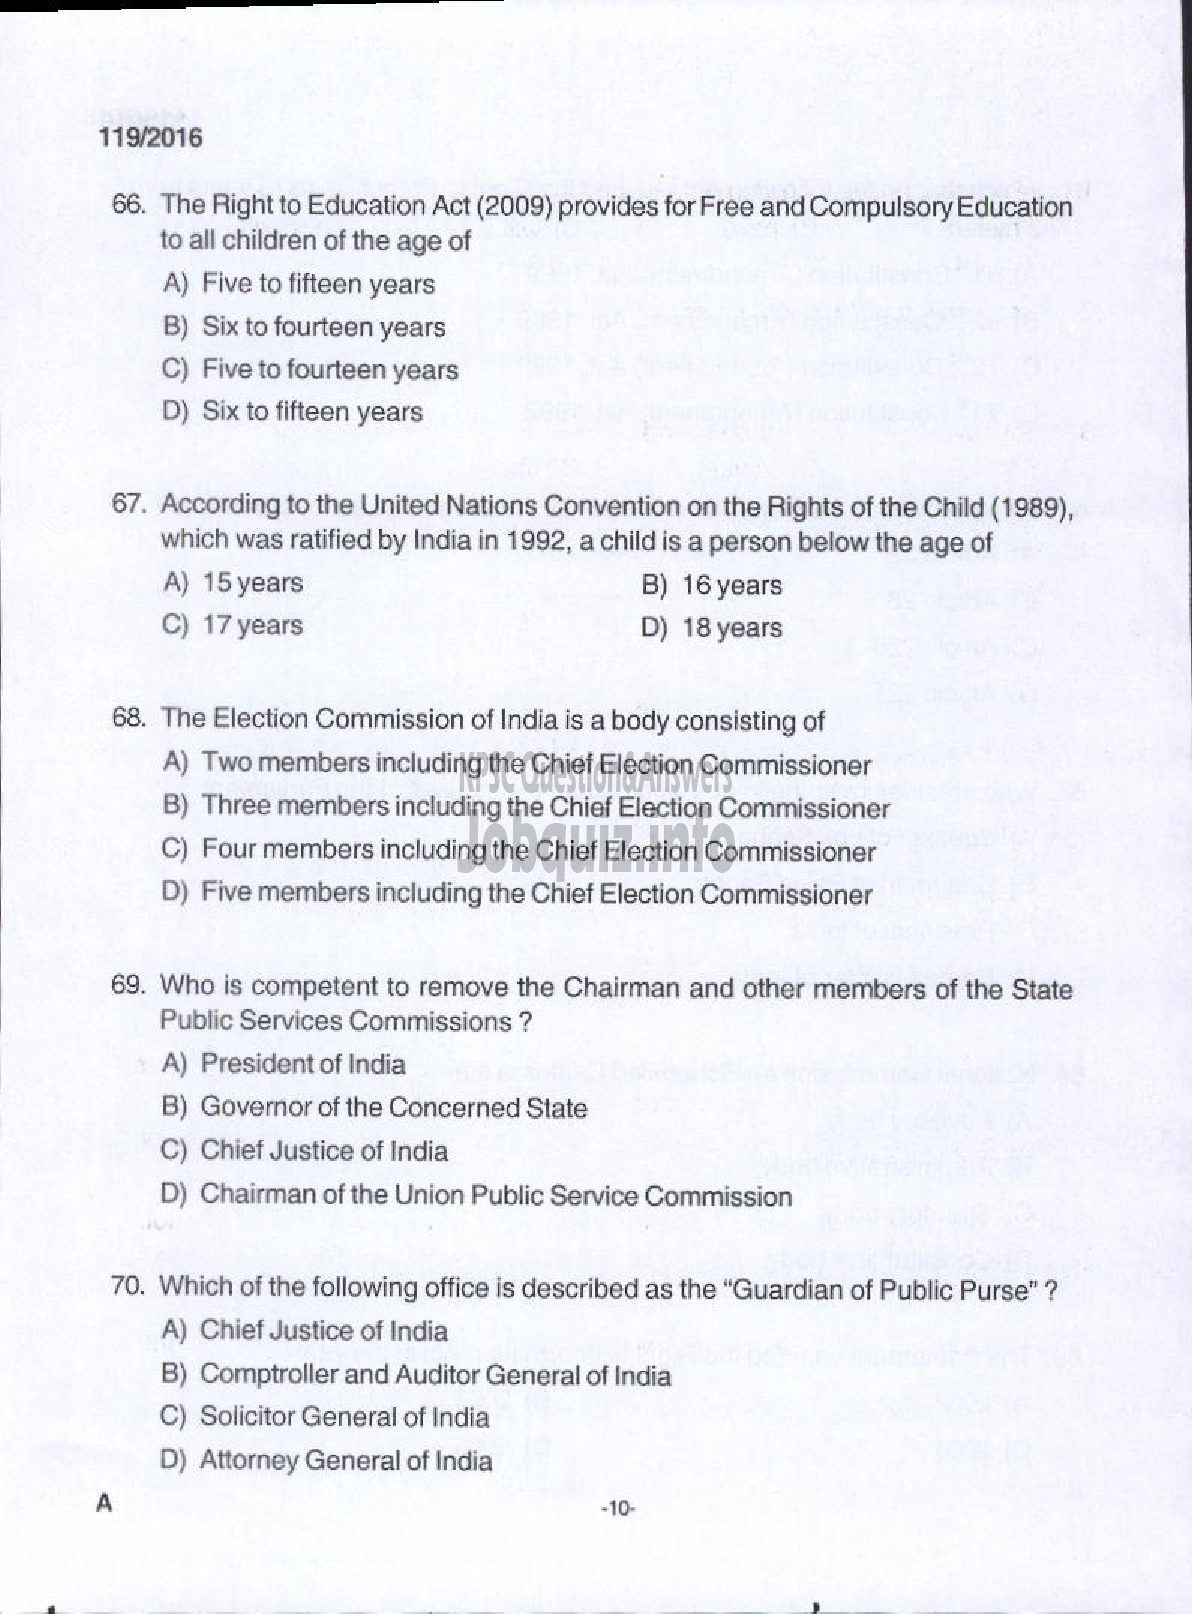 Kerala PSC Question Paper - SENIOR SUPERINTENDENT /ASST DISTRICT LOTTERY OFFICER STATE LOTTERIES/ASST JAILOR GR I/SUPDT, SUB JAIL JAIL / LDC VARIOUS COMPANIES /BOARD-8